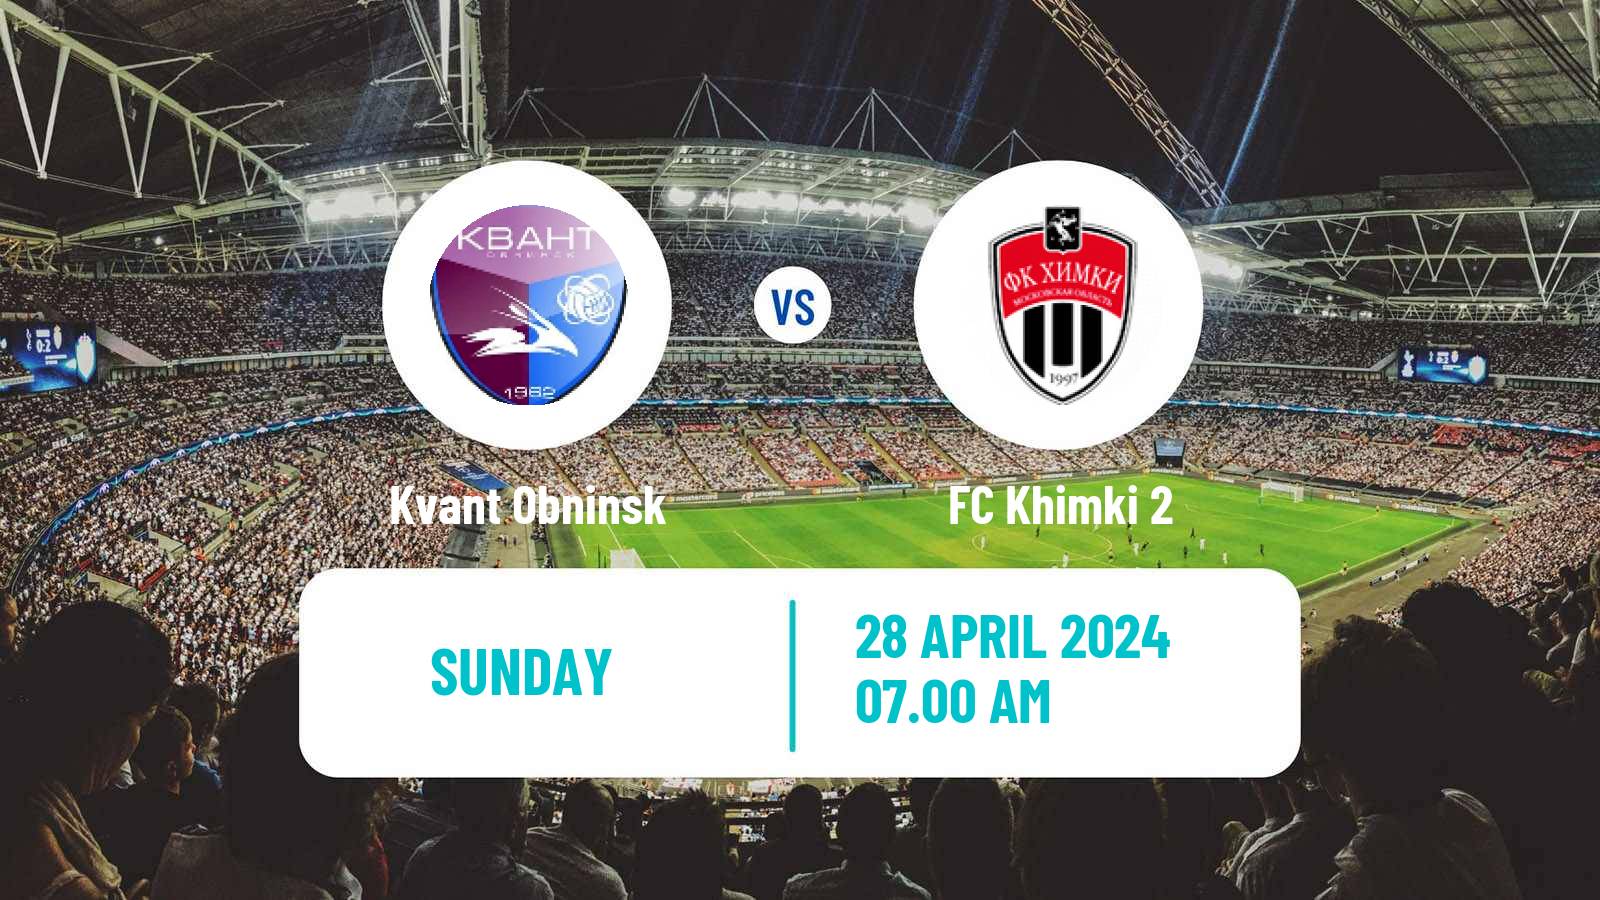 Soccer FNL 2 Division B Group 3 Kvant Obninsk - Khimki 2